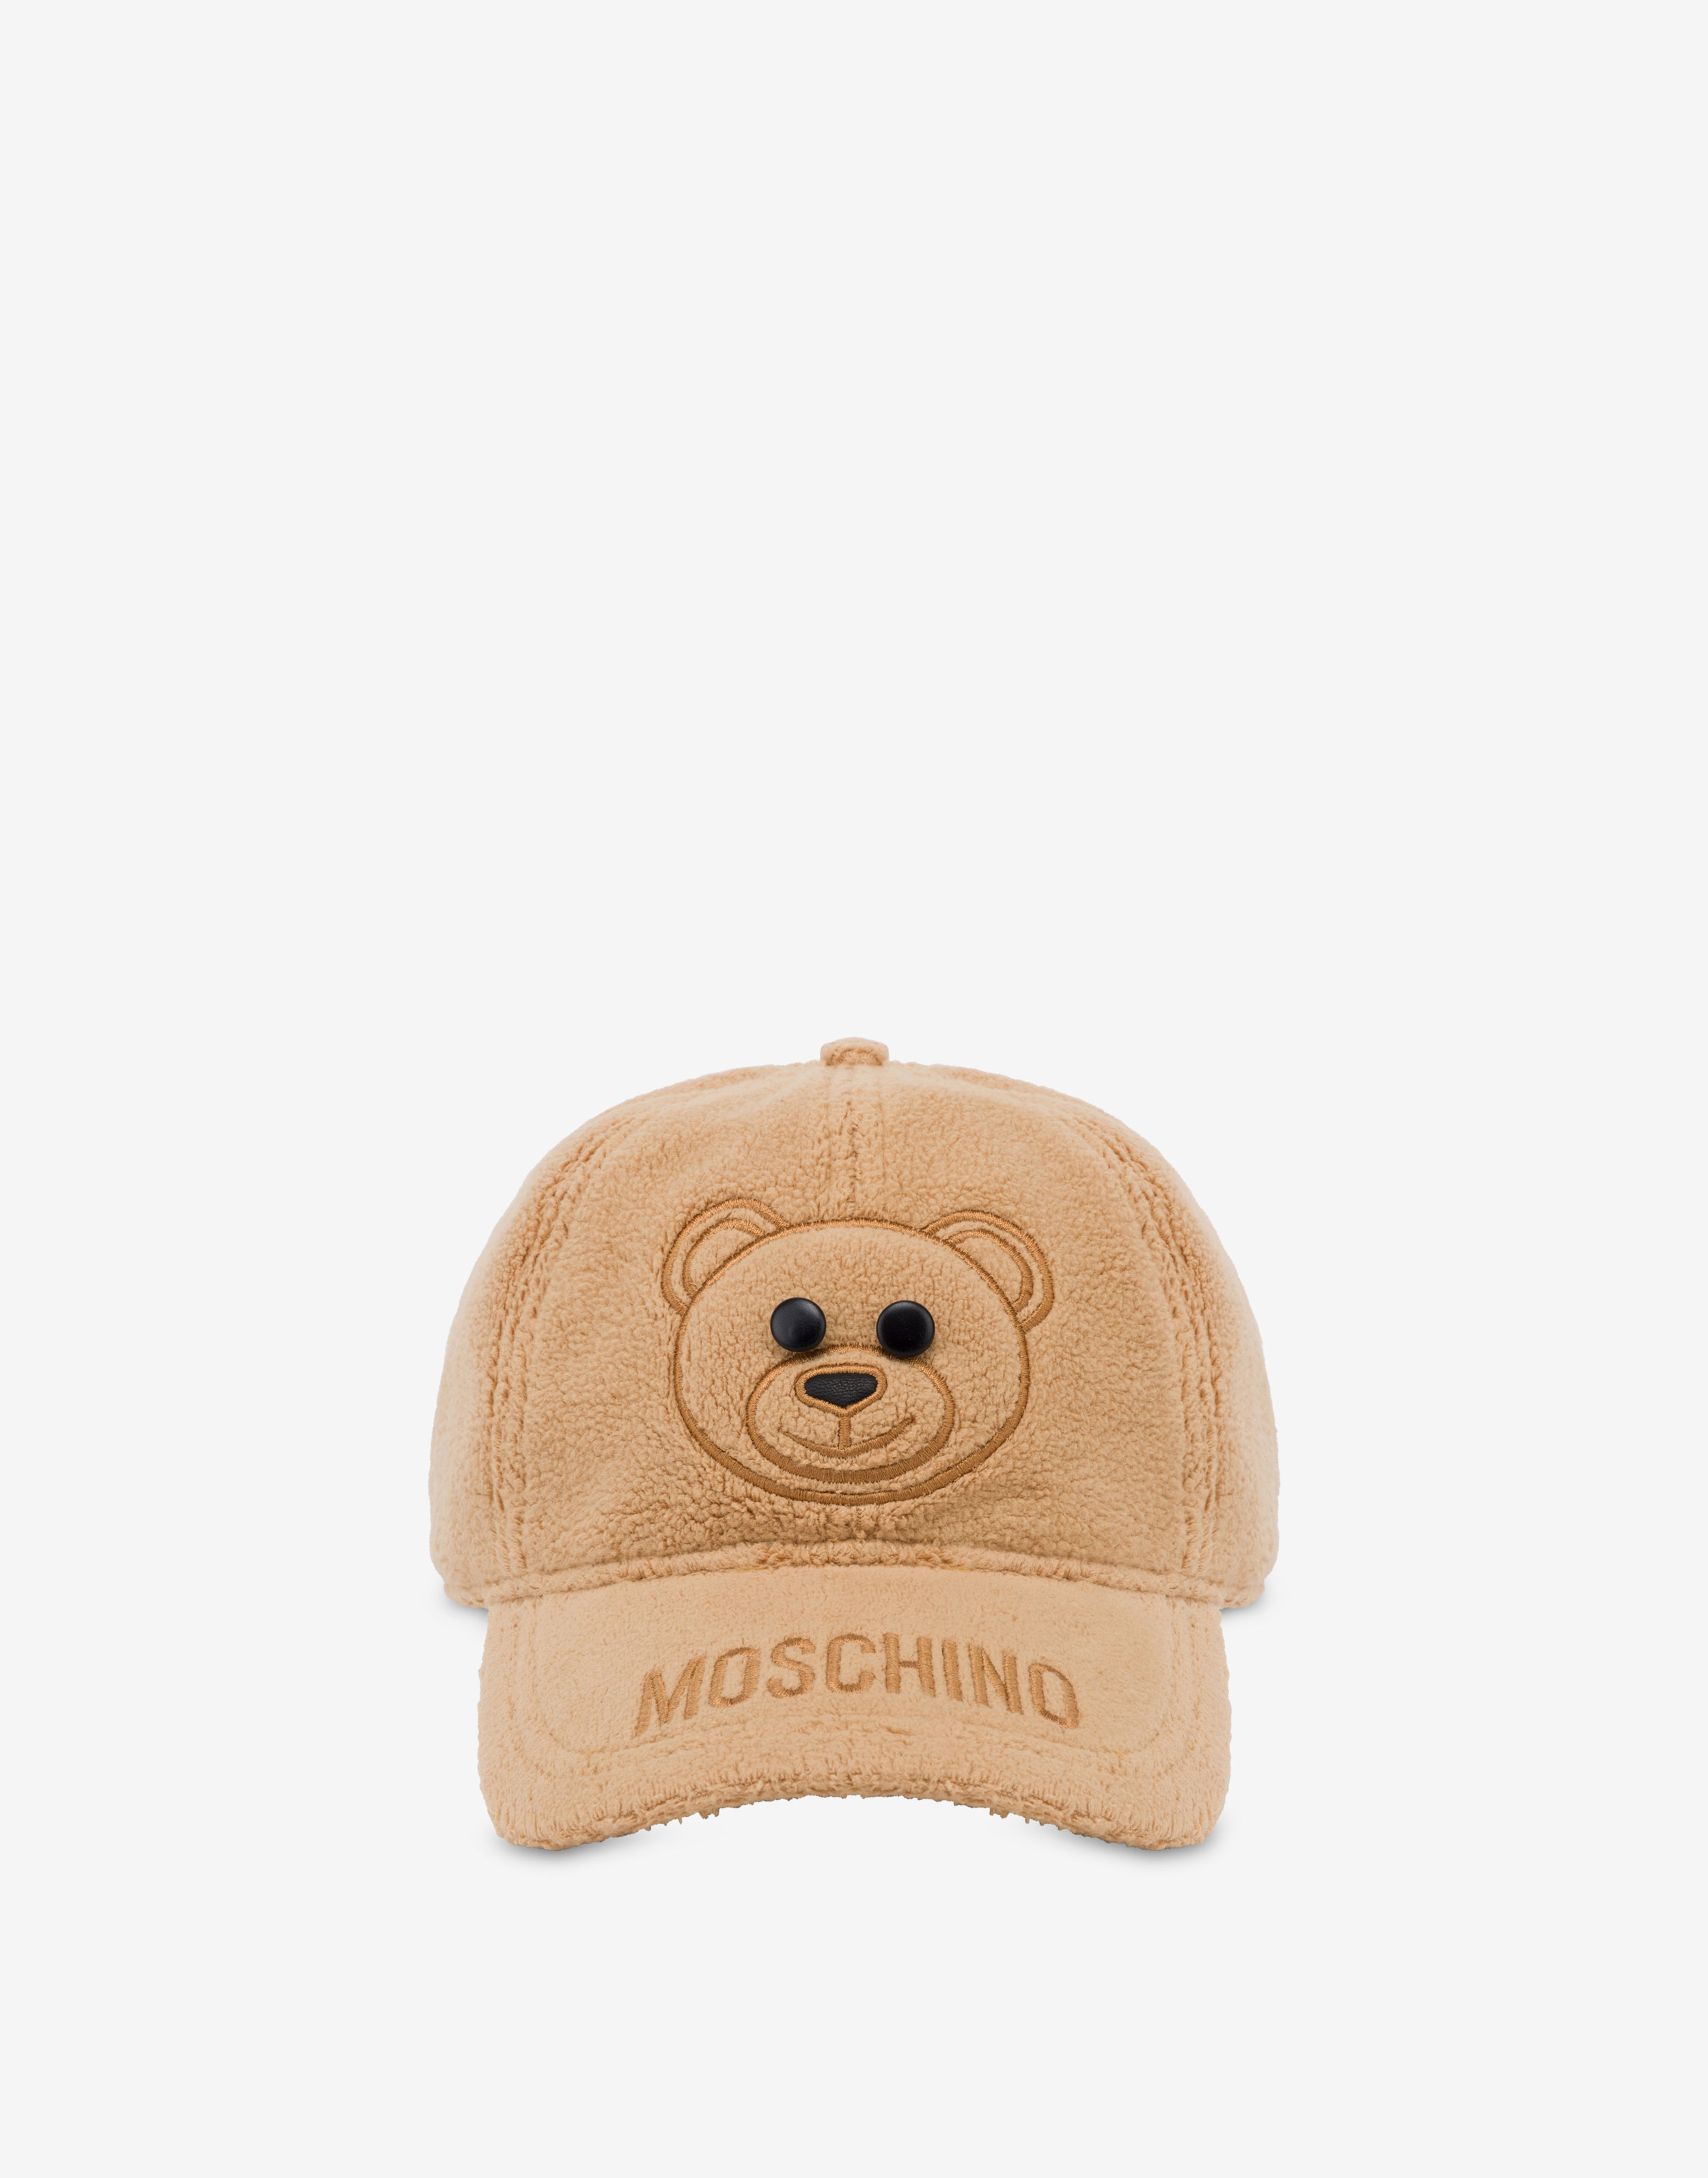 Moschino Teddy Bear visor cap